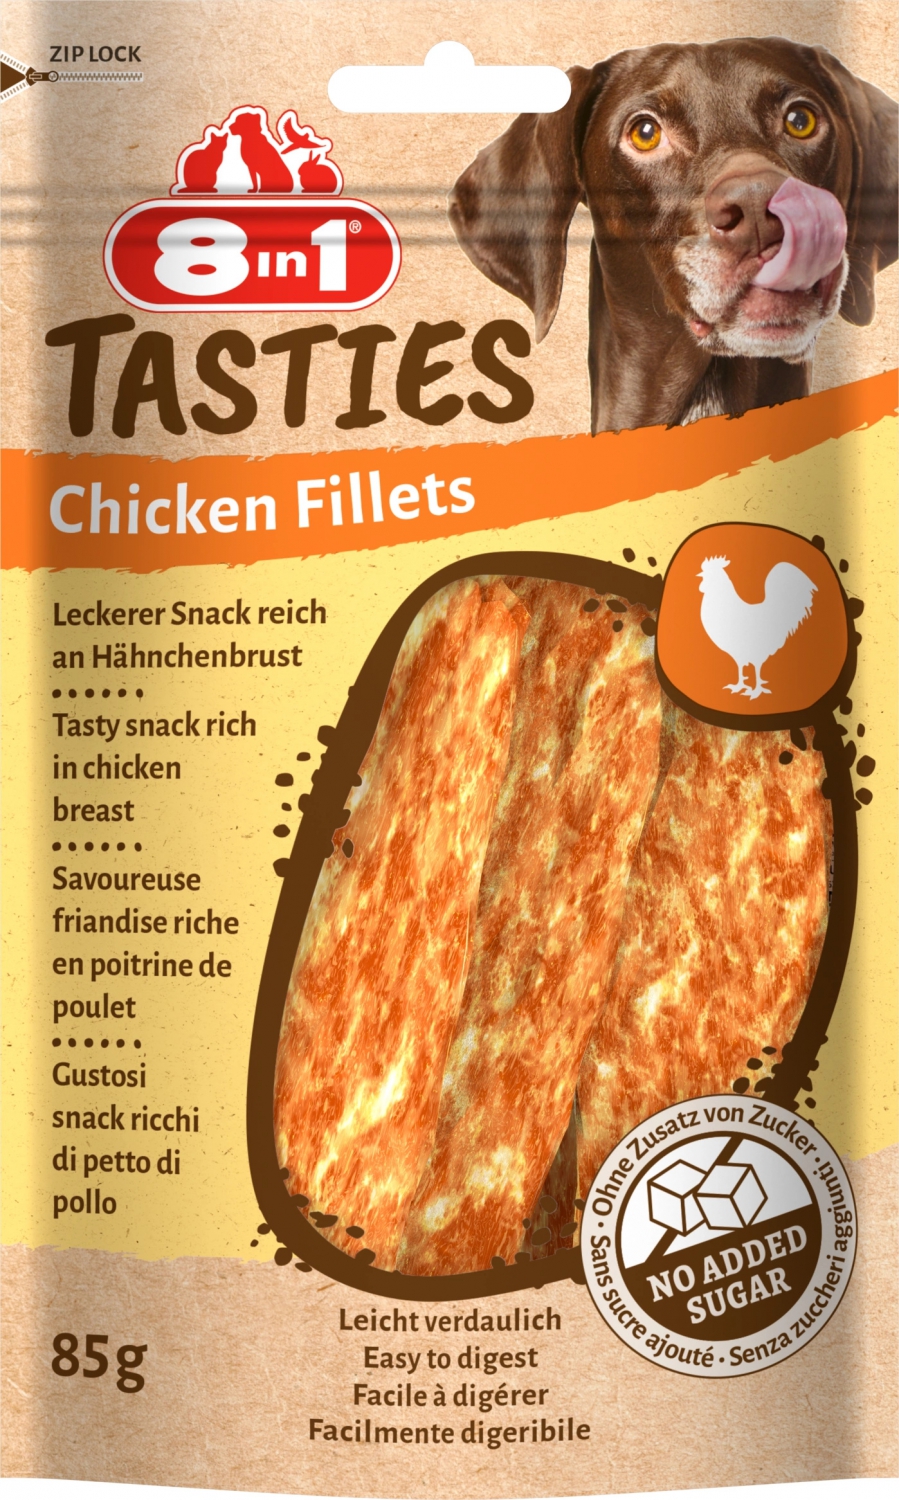 8in1 Tasties Chicken Fillets Przysmak dla psa pierś kurczaka 85g